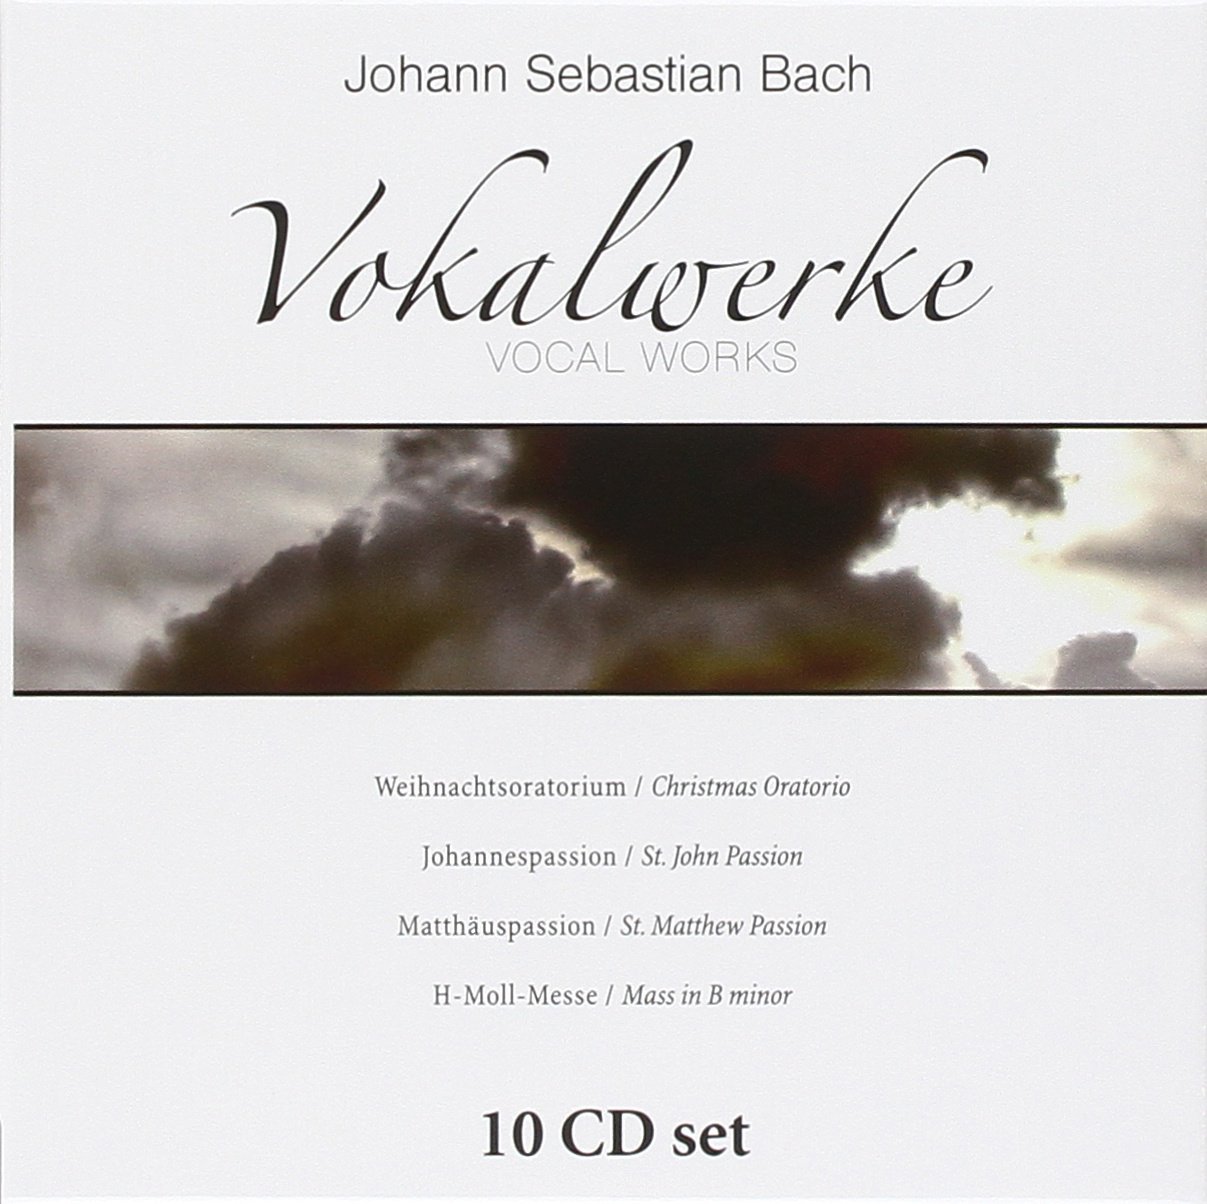 Johann Sebastian Bach\'s vocal works: Christmas Oratorio, St. John Passion, St. Matthew Passion & Mass in B minor | Dietrich Fischer-Dieskau, Elisabeth Schwarzkopf, Johann Sebastian Bach